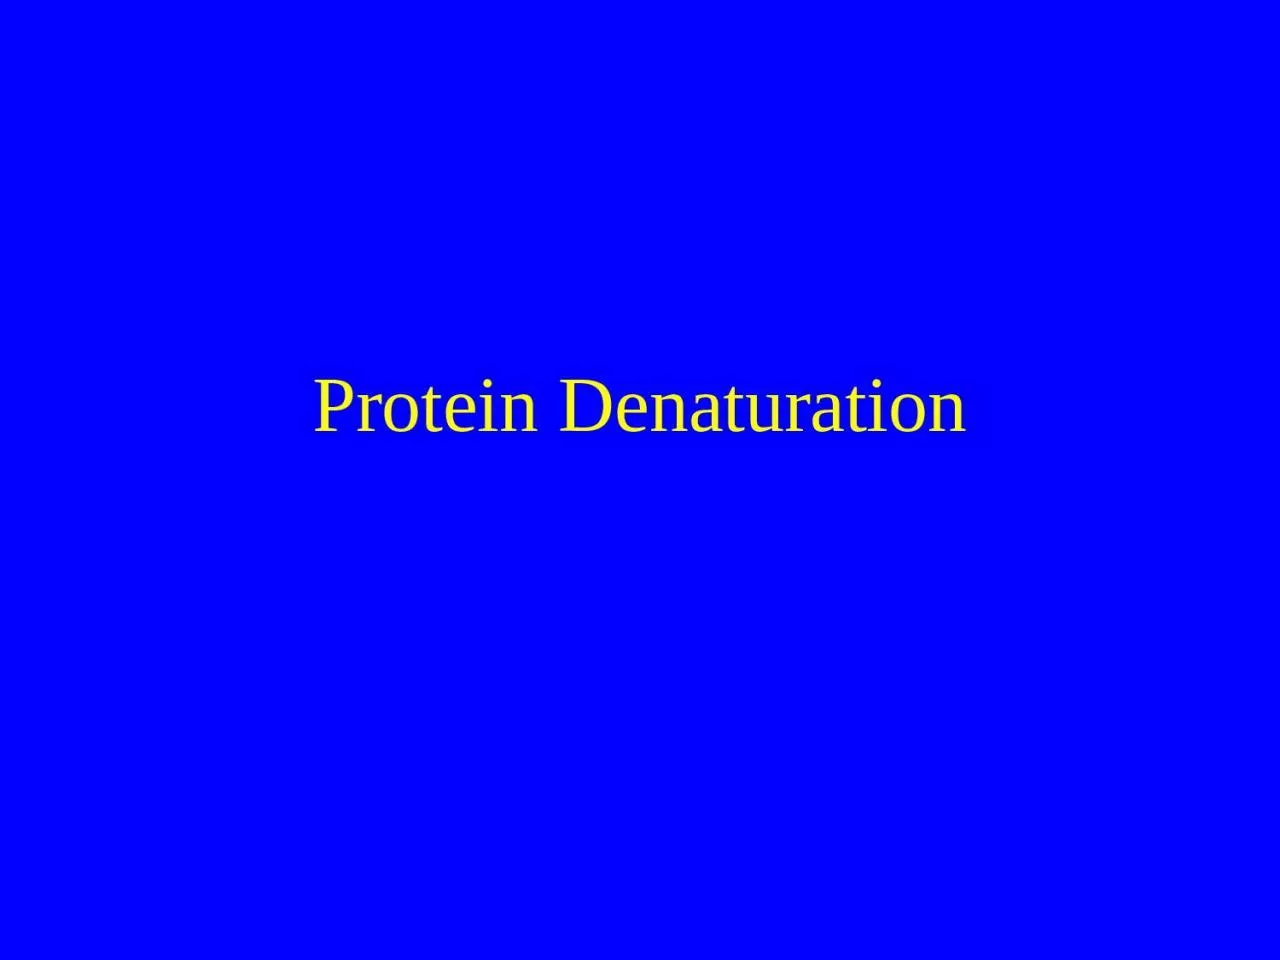 Protein Denaturation Goals